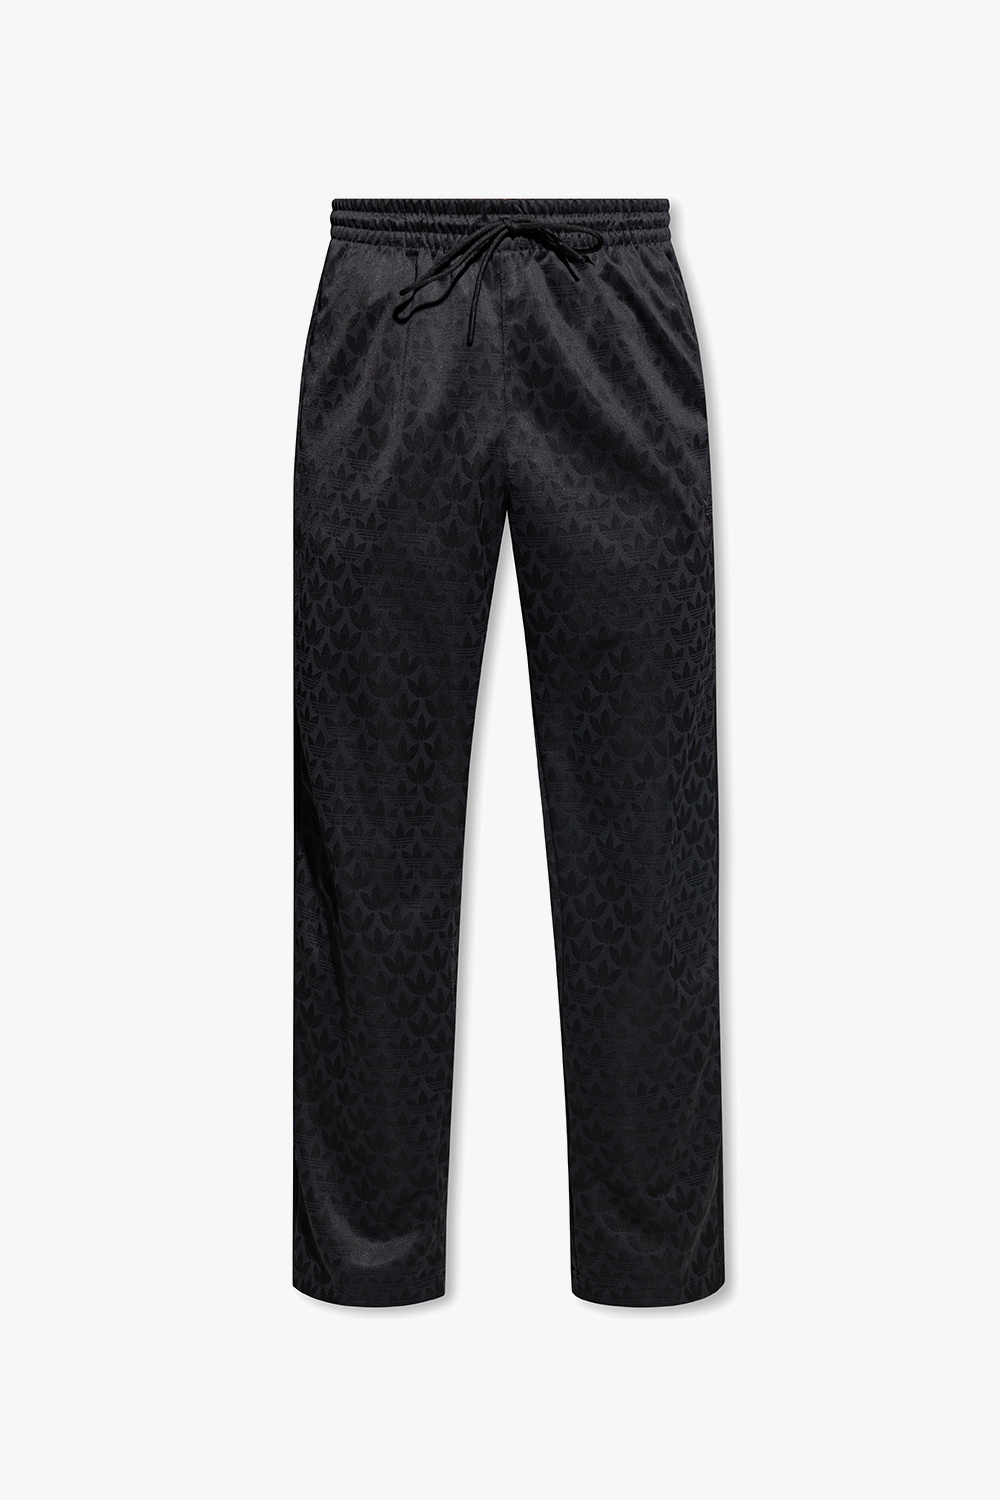 Louis Vuitton Black Unisex Hoodie And Long Pants Luxury Brand